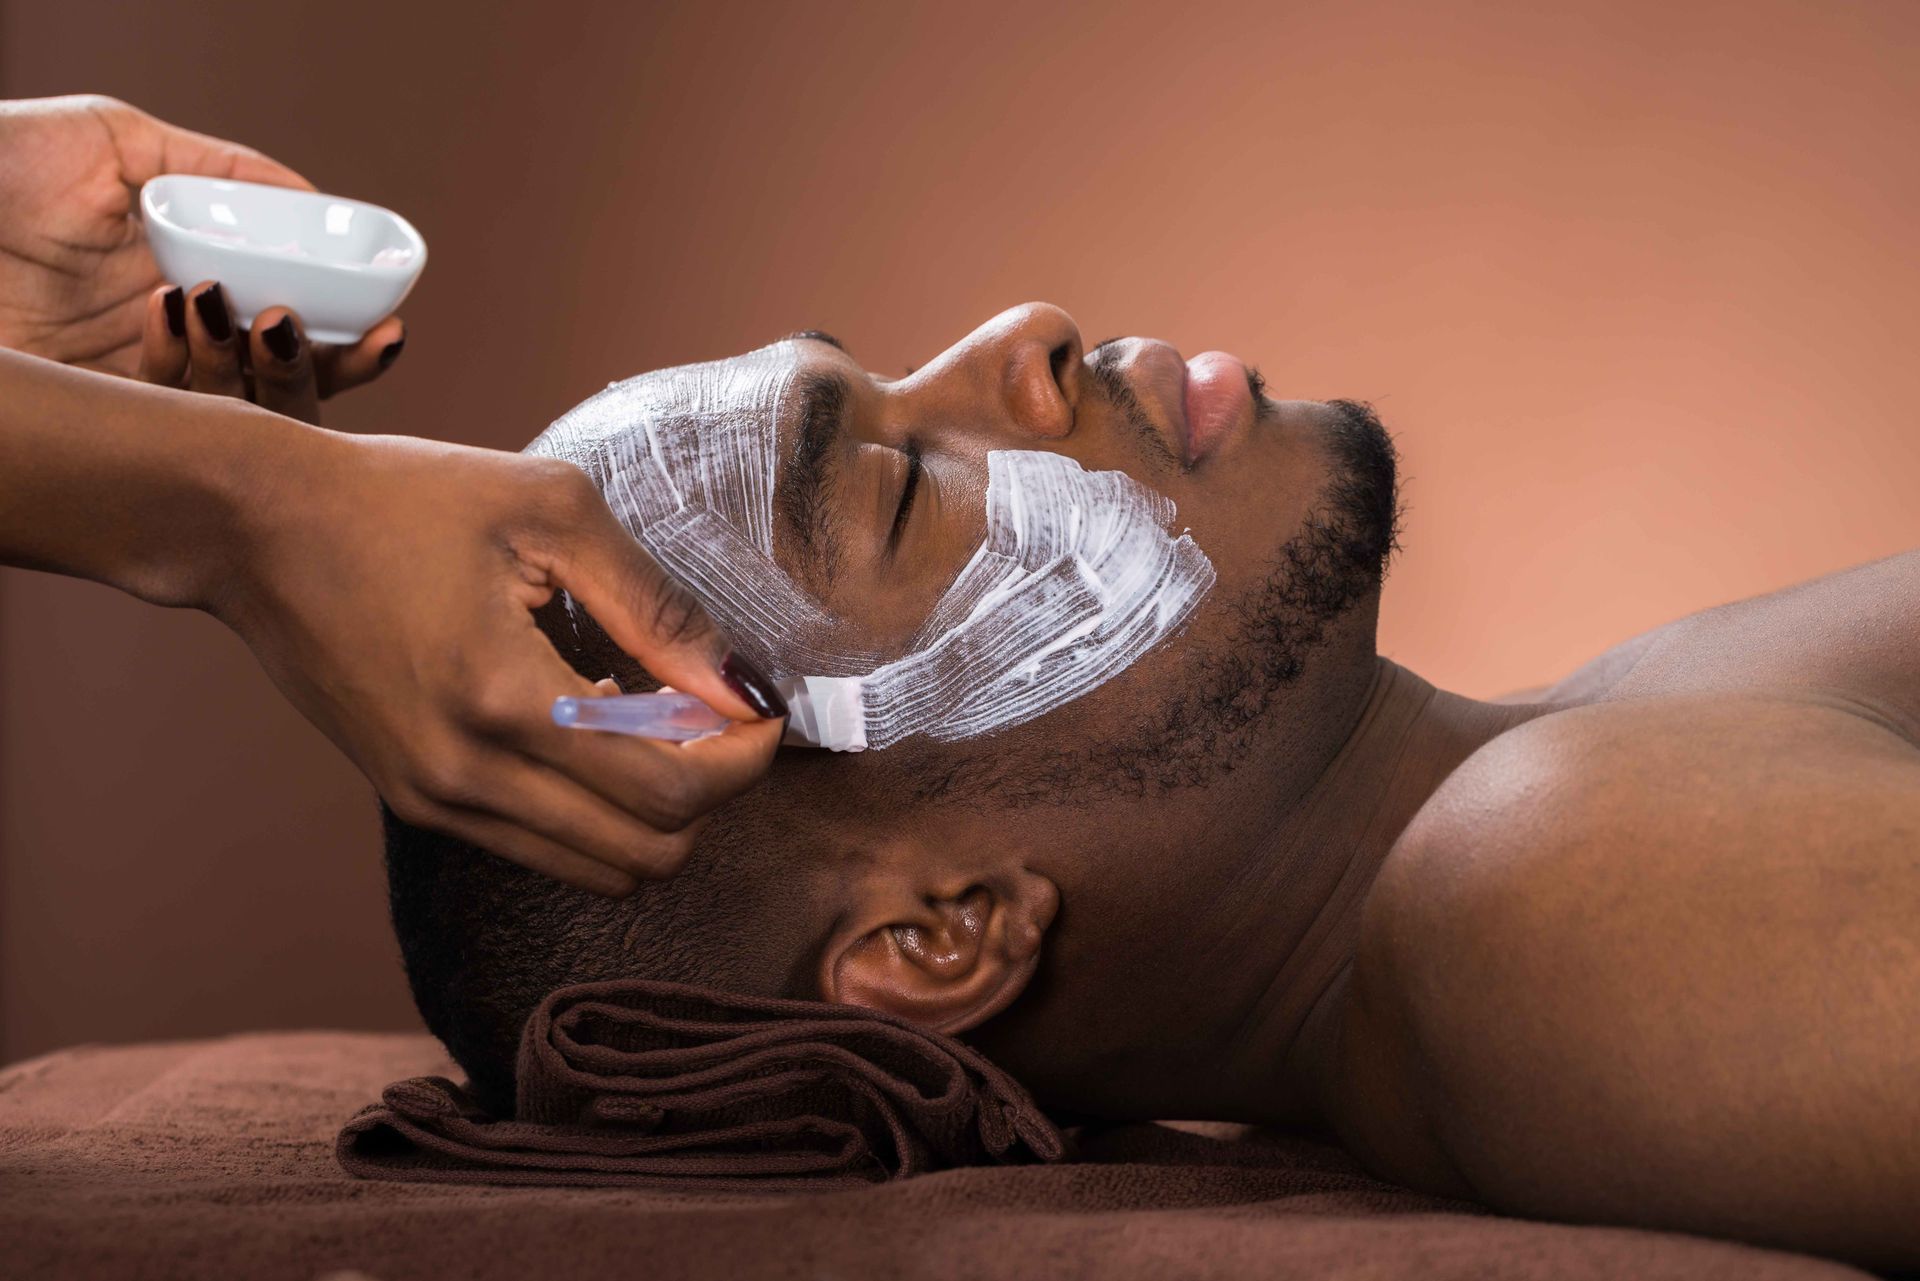 A man is getting a facial treatment at a spa